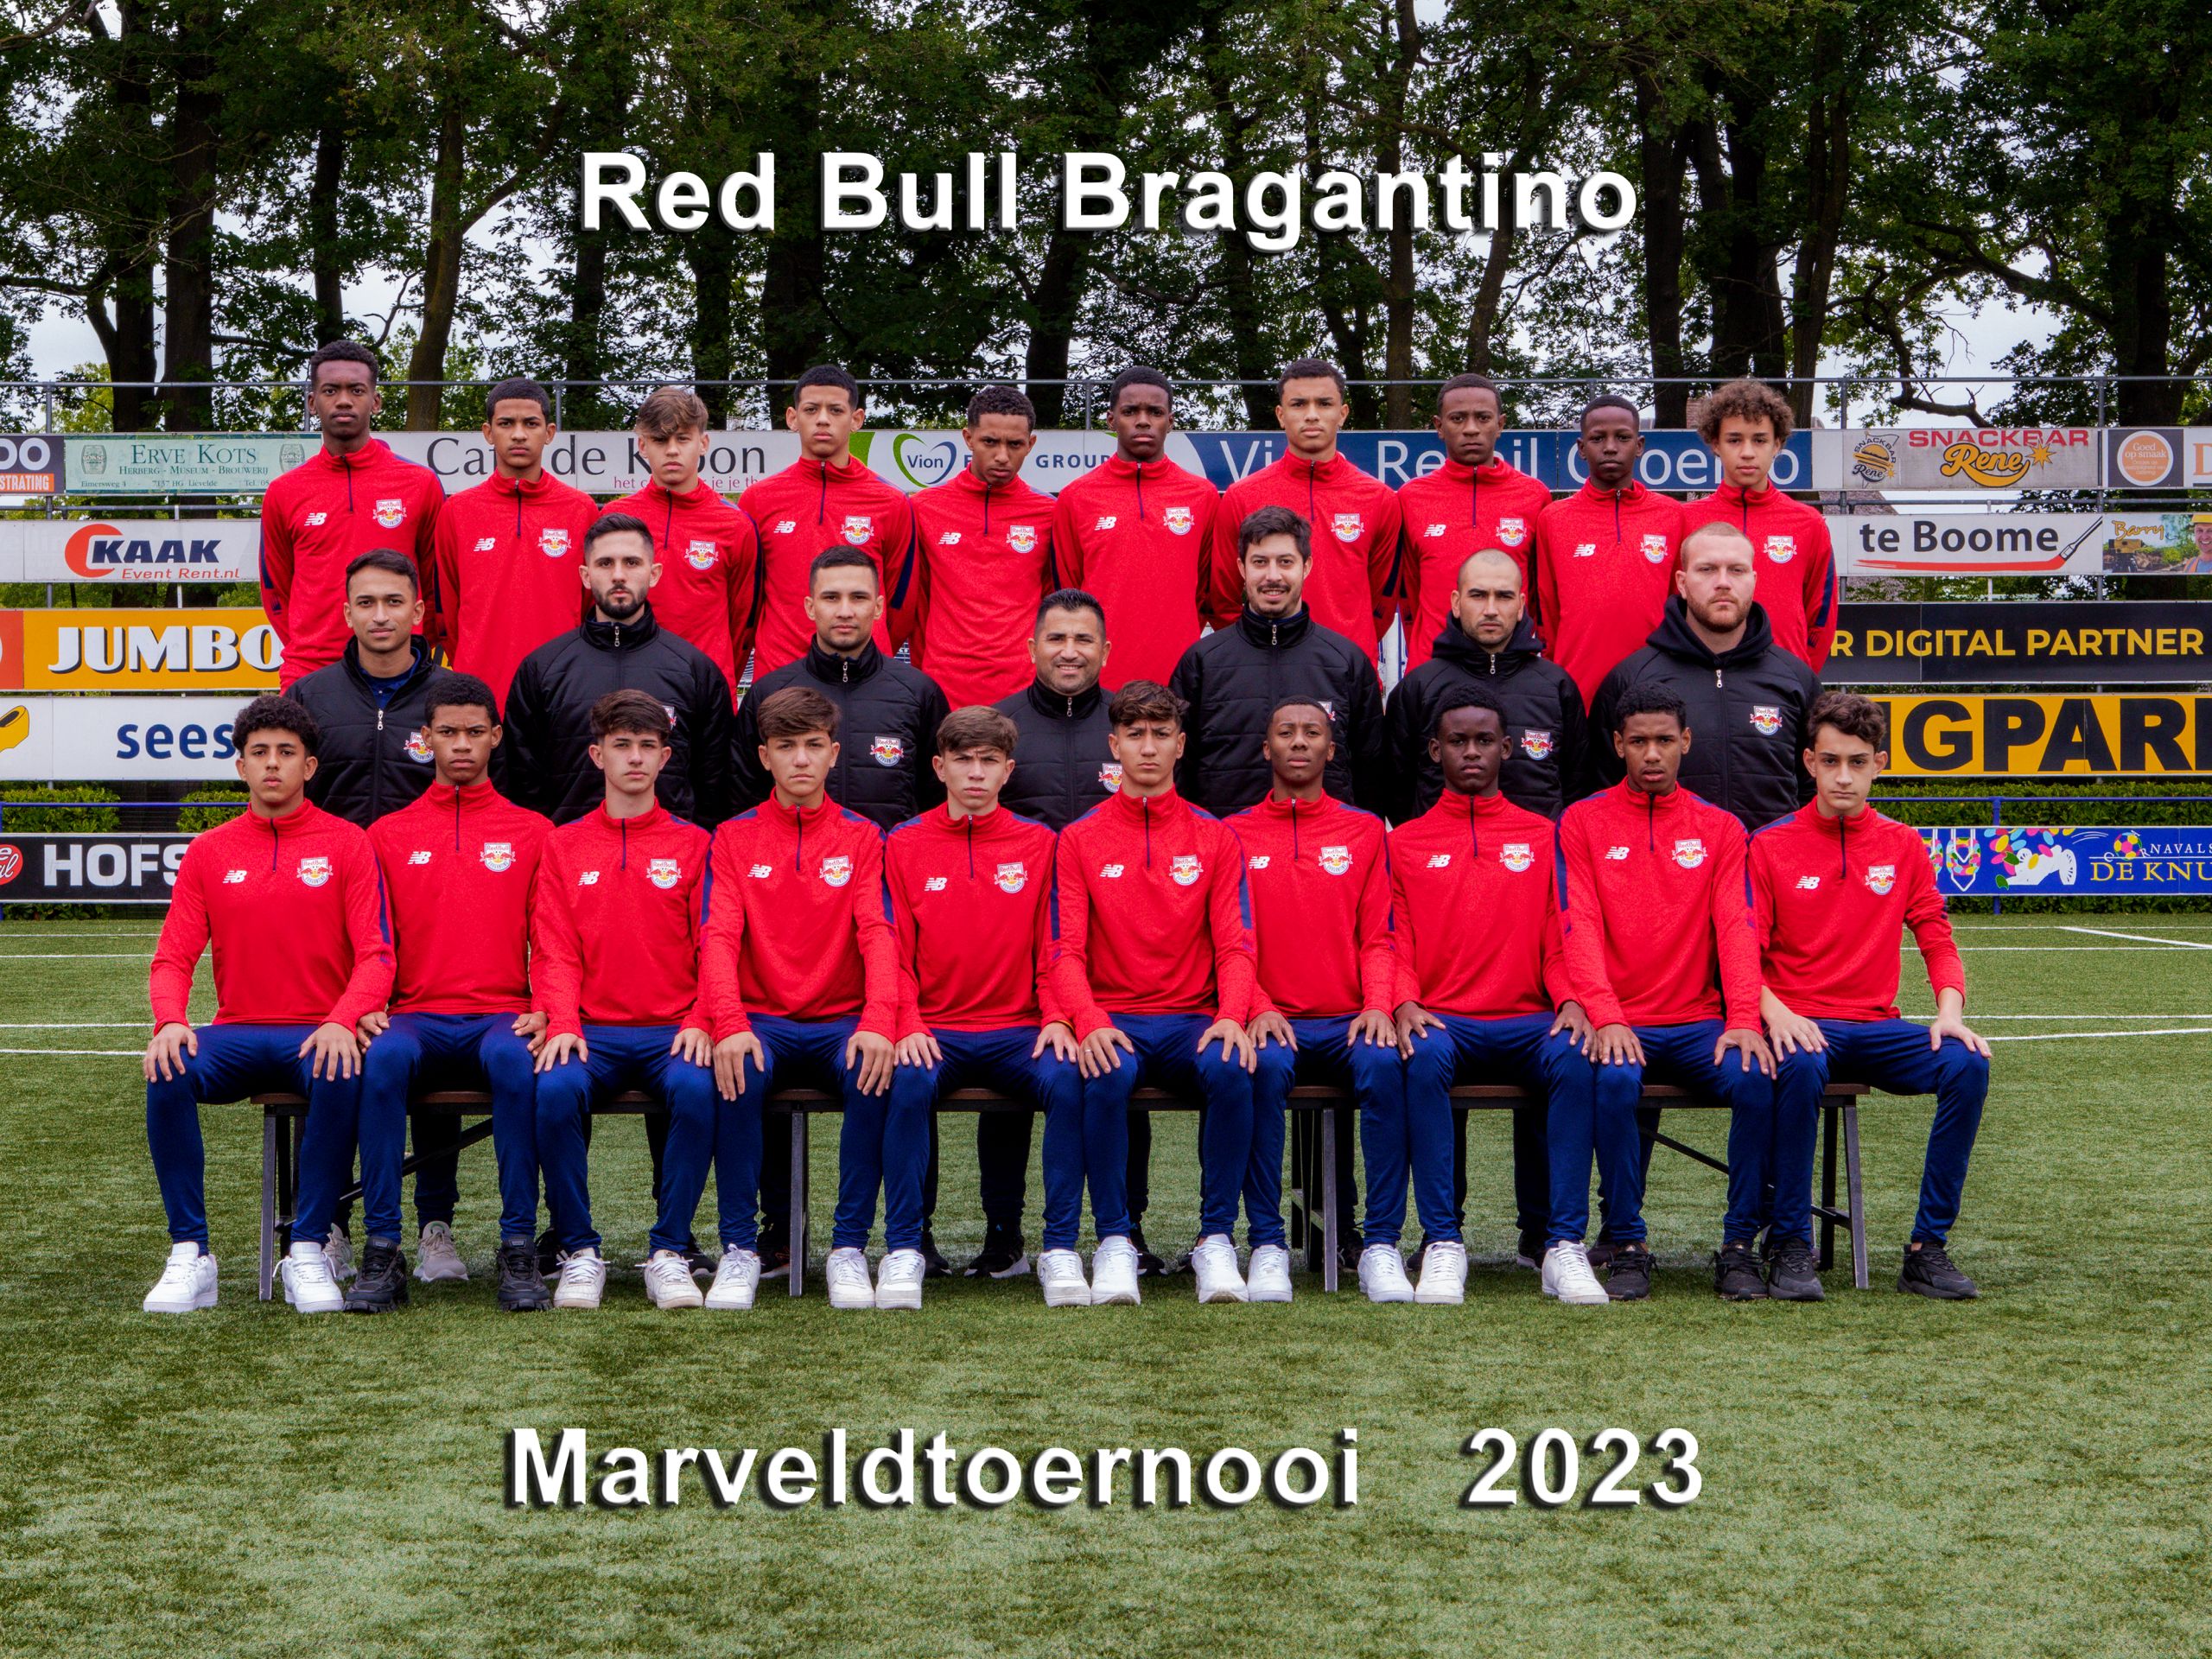 Marveld Tournament 2023 - Team Red Bull Bragantino